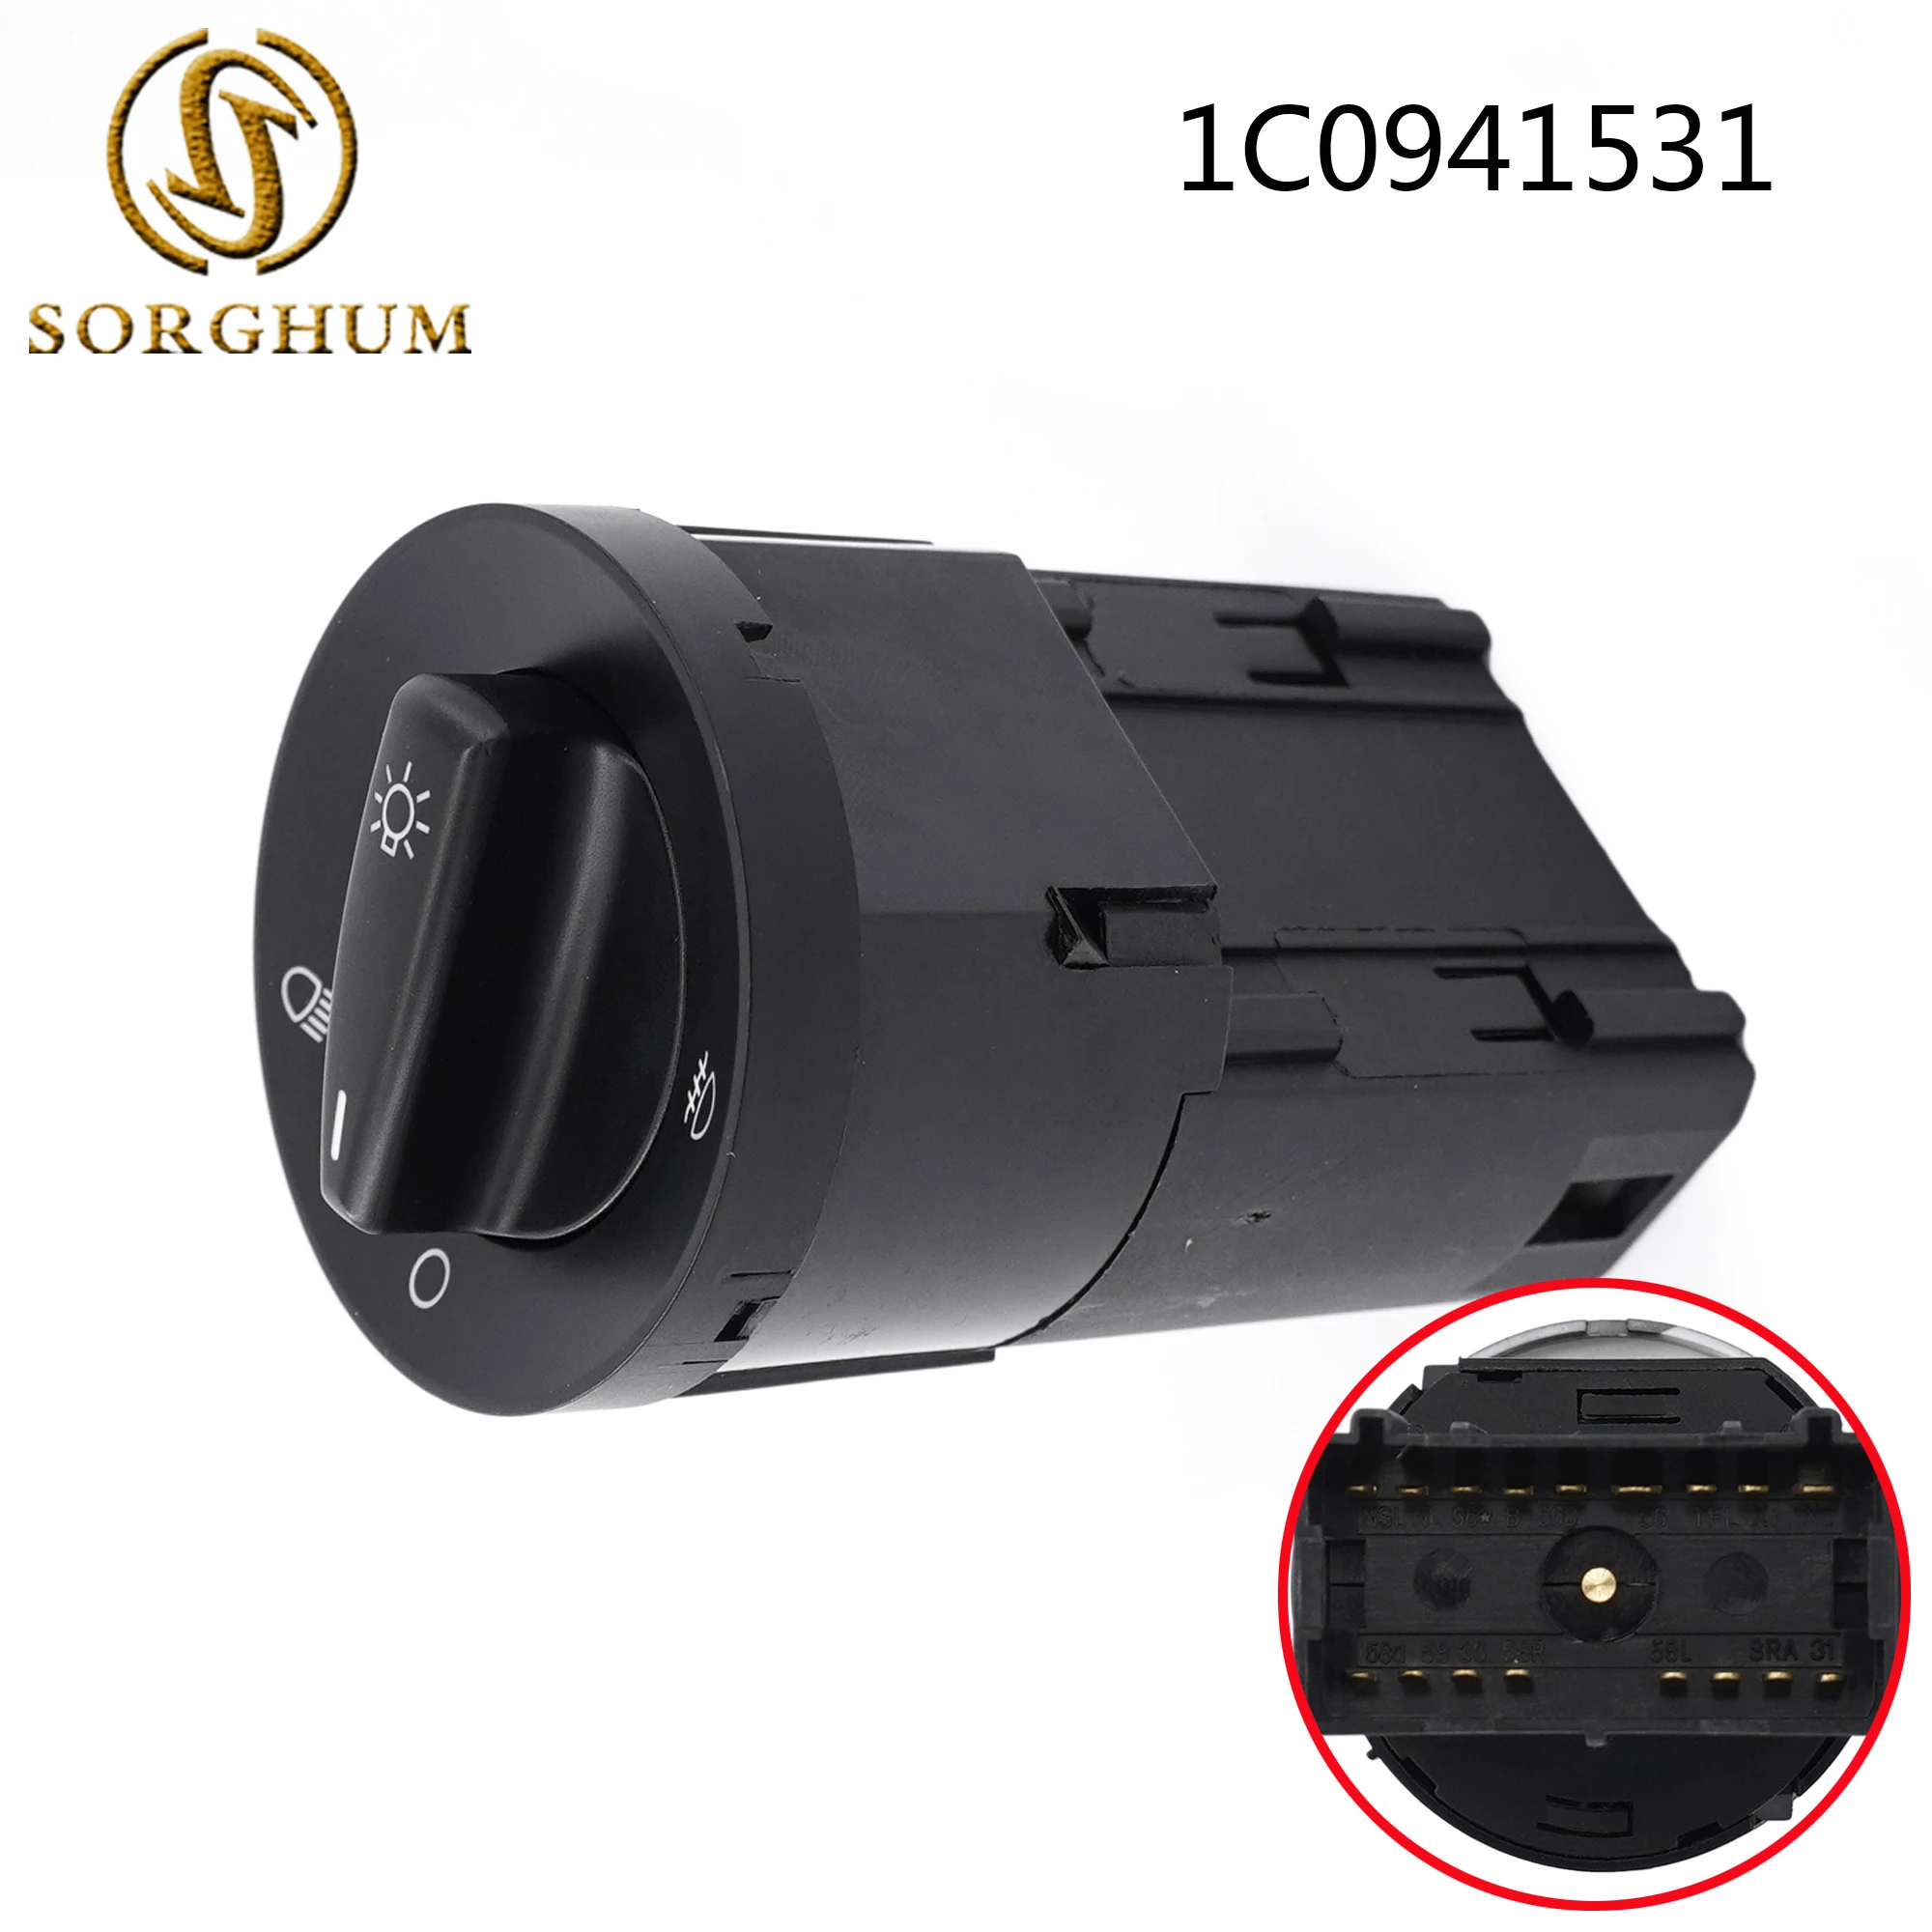 Sorghum 1C0941531 Headlights Headlamp Fog Light Switch Rotary Button For Volkswagen VW Jetta MK4 Bora Golf Passat 5 Beetle